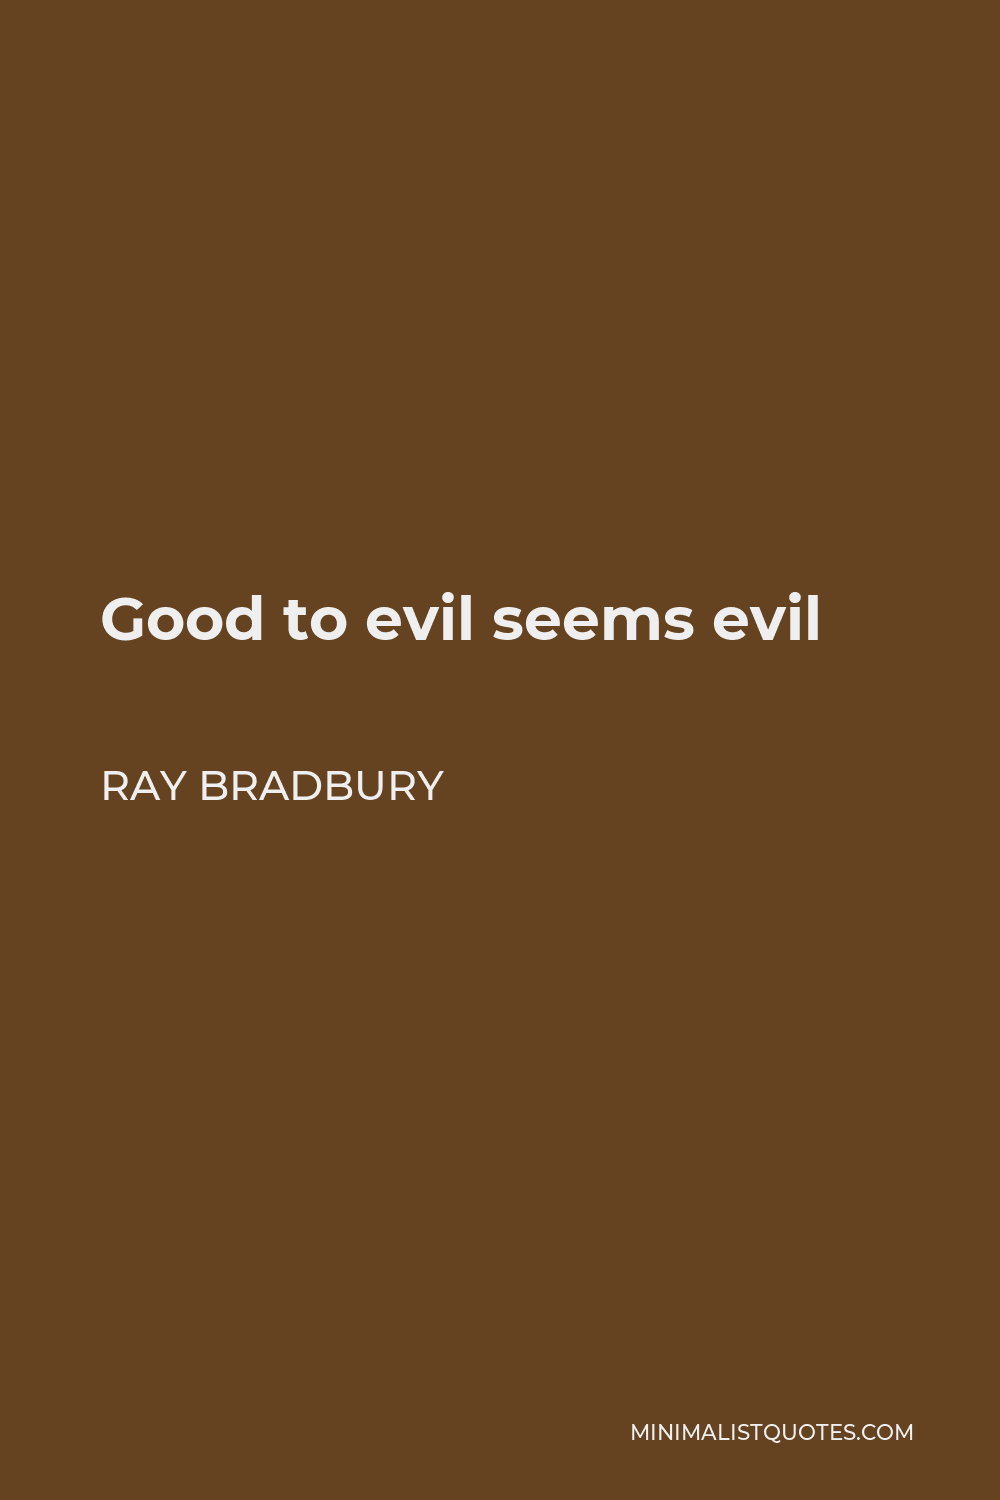 Ray Bradbury Quote - Good to evil seems evil